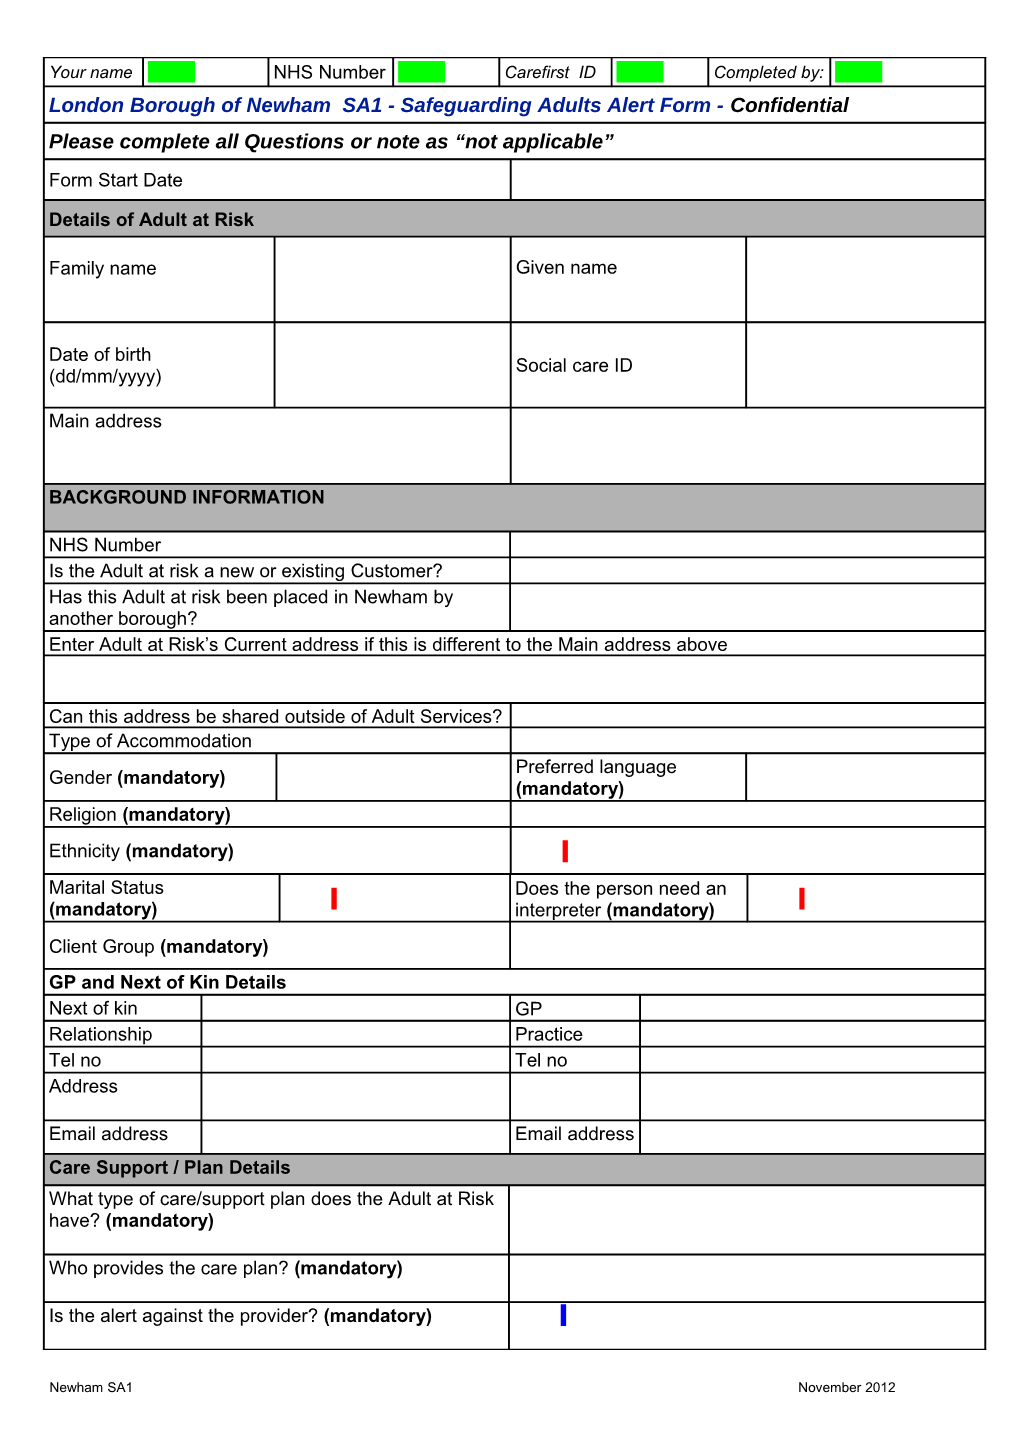 London Borough of Newham SA1 - Safeguarding Adults Alert Form - Confidential